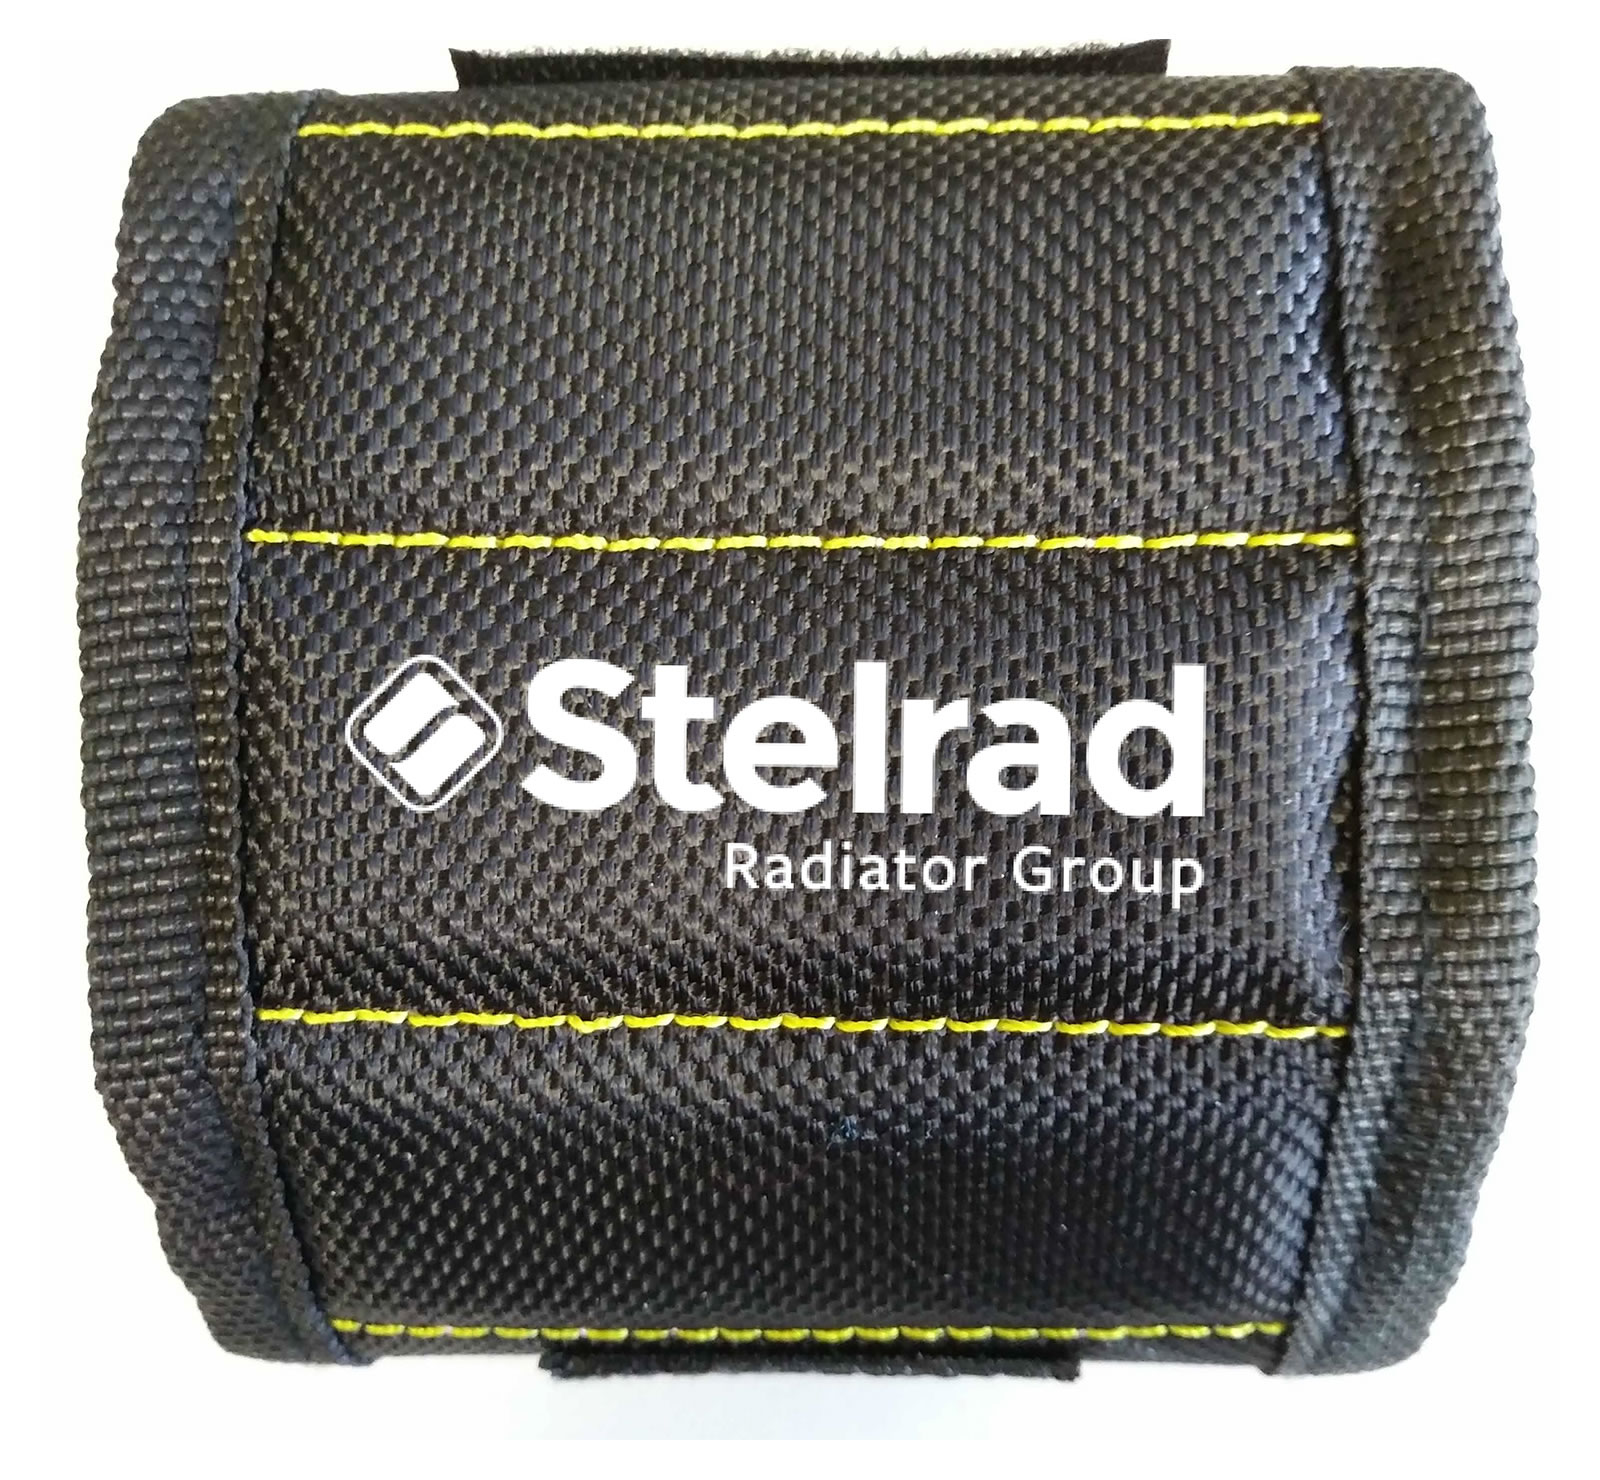 Stelrad branded magnetic wristband loyalty reward